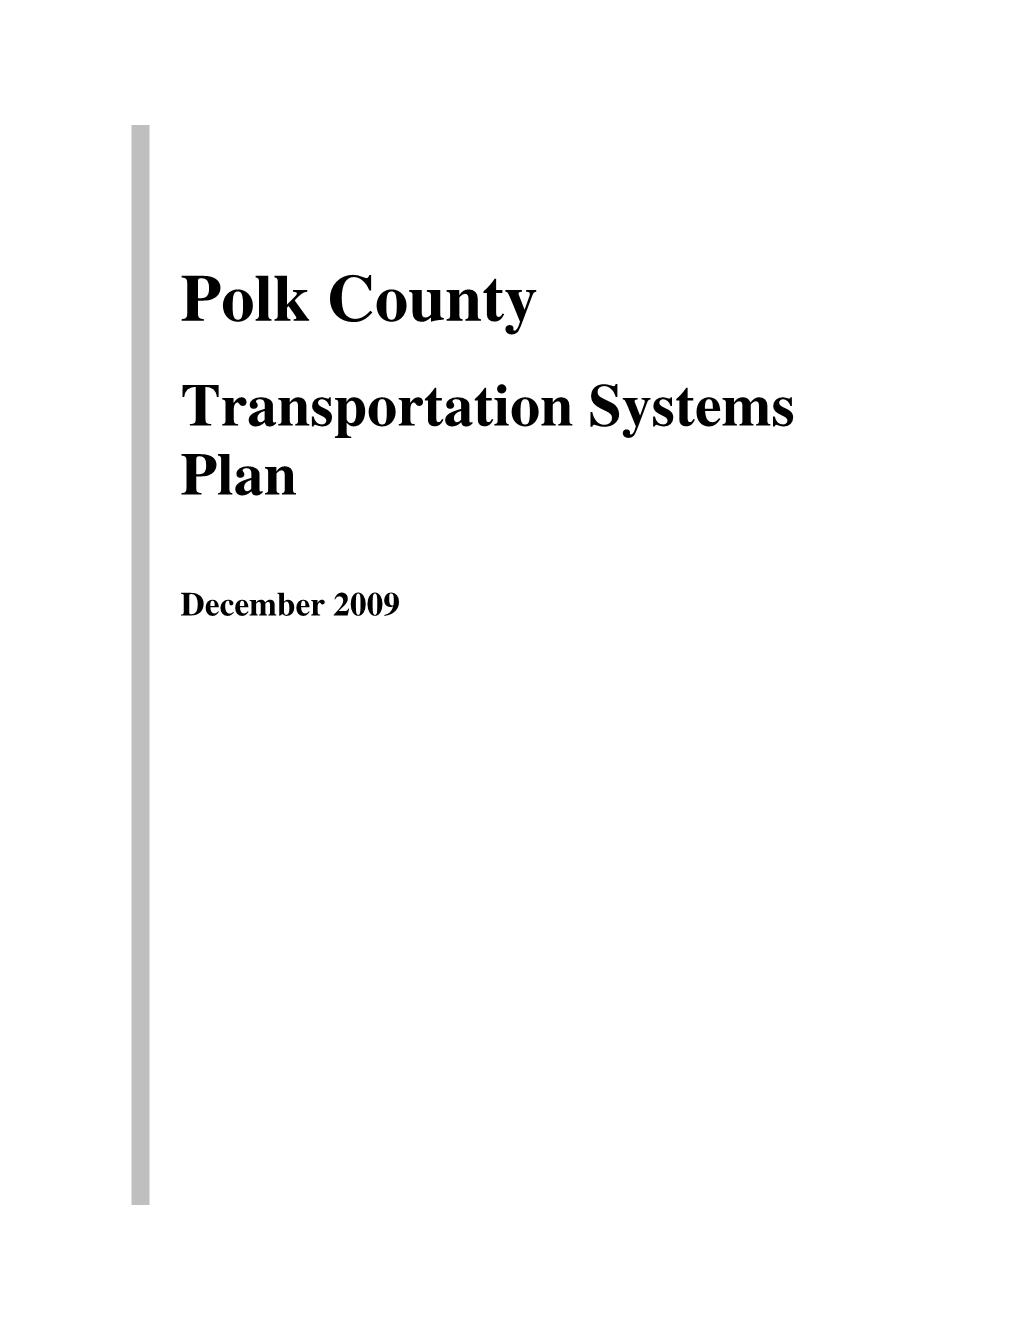 Transportation Systems Plan